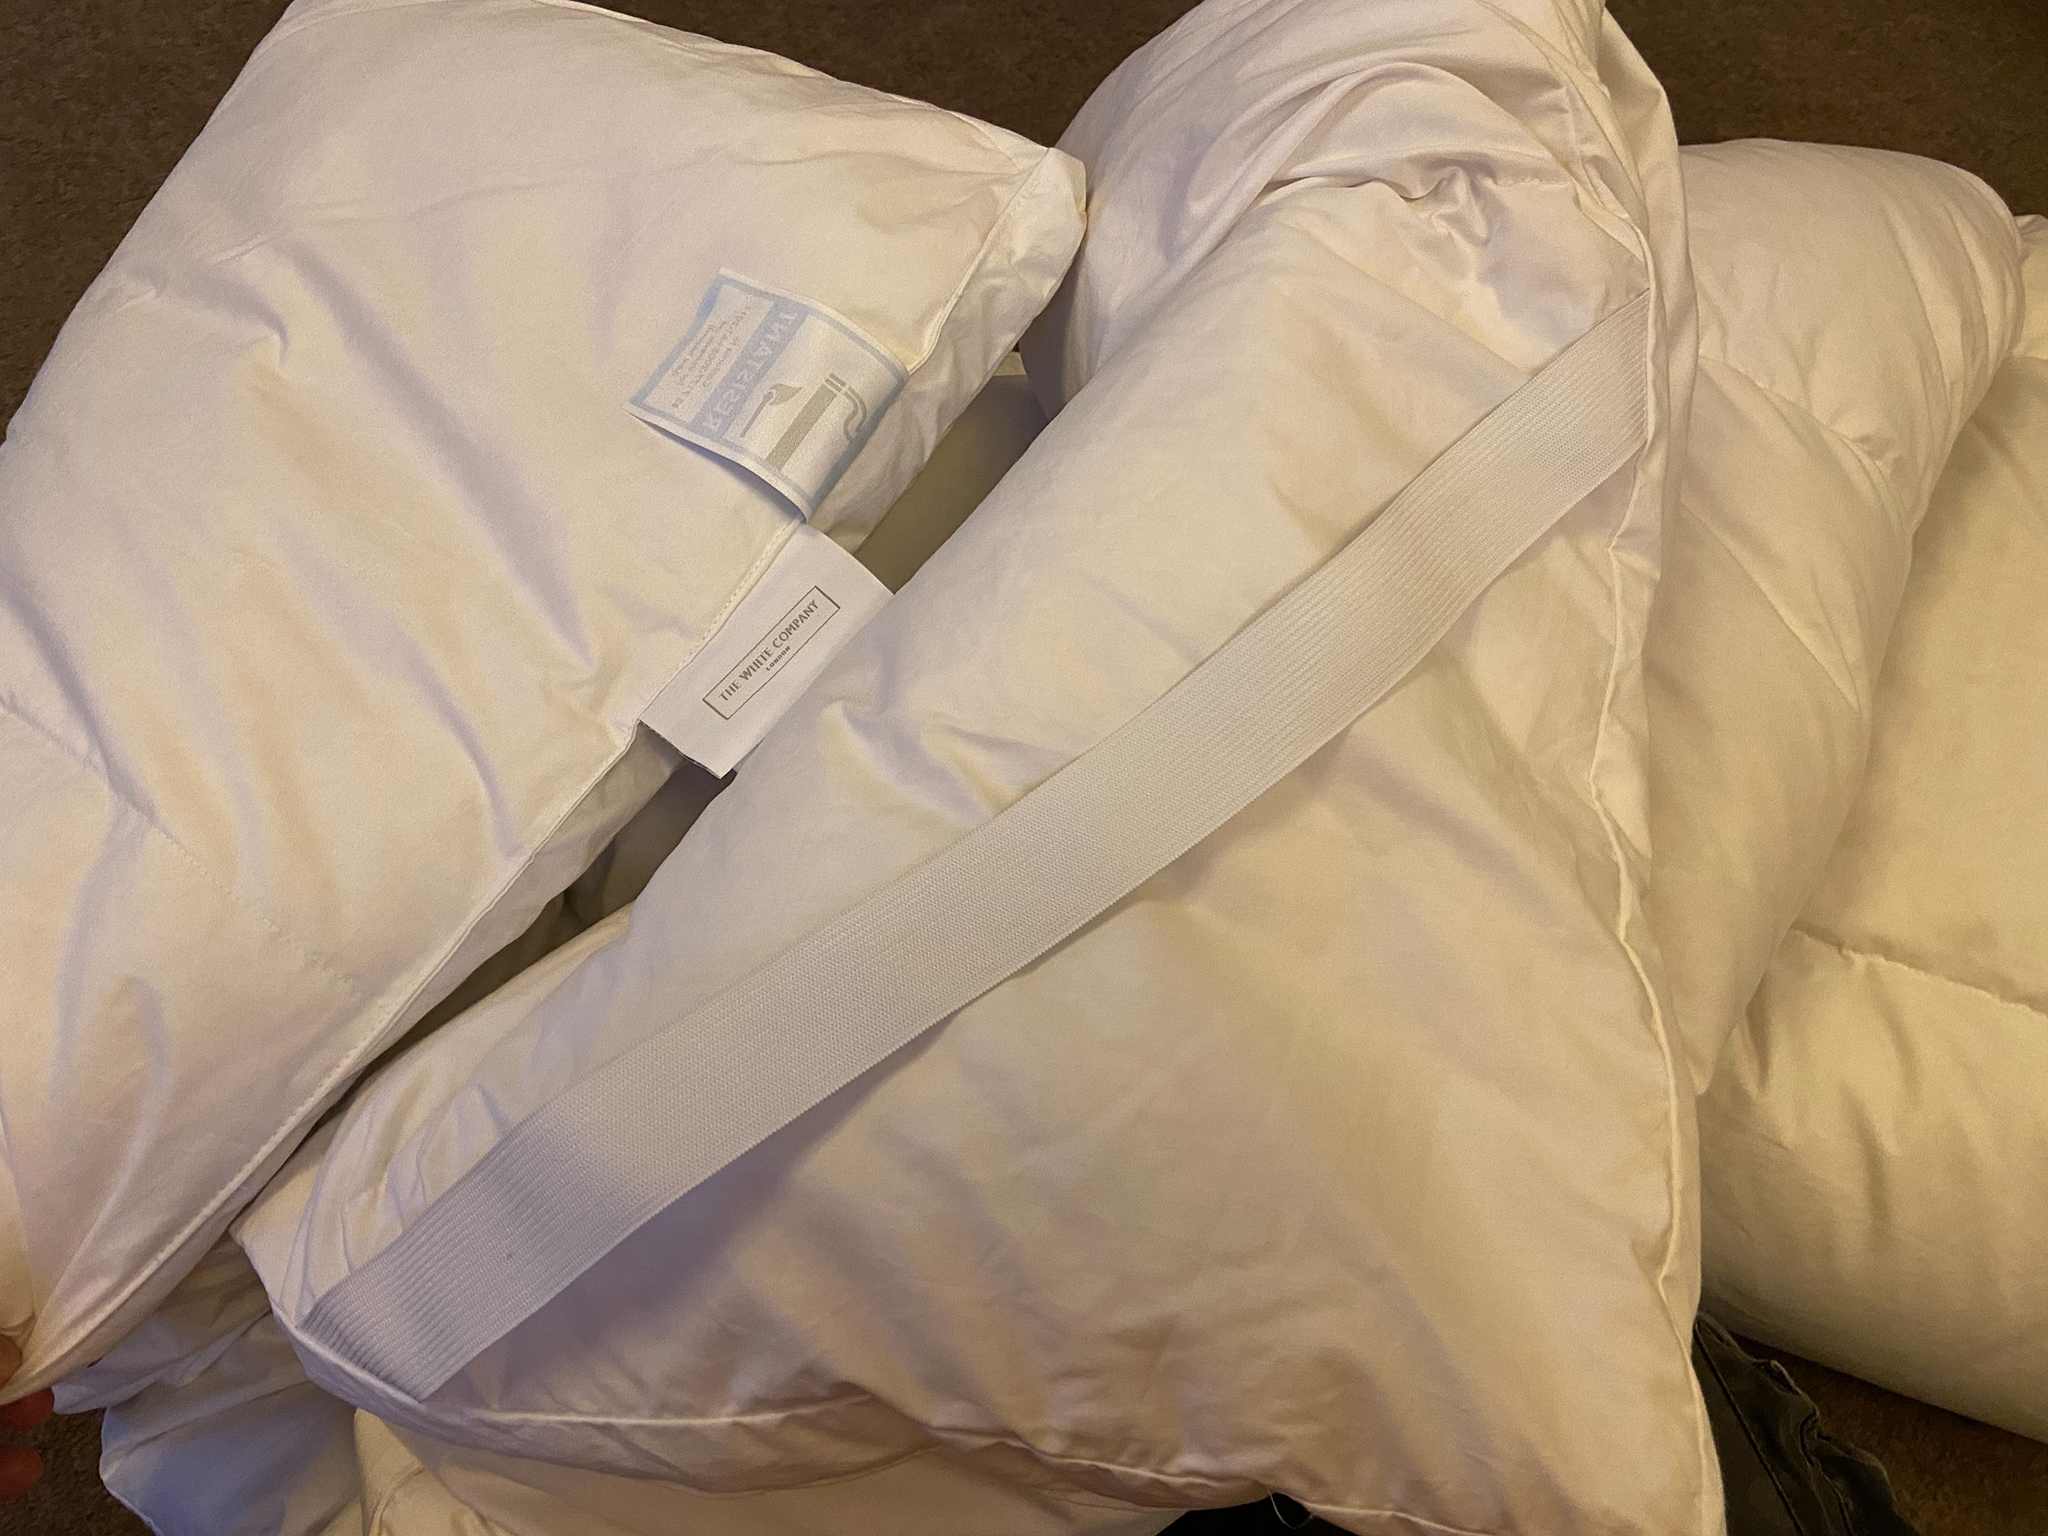 The White Company mattress topper